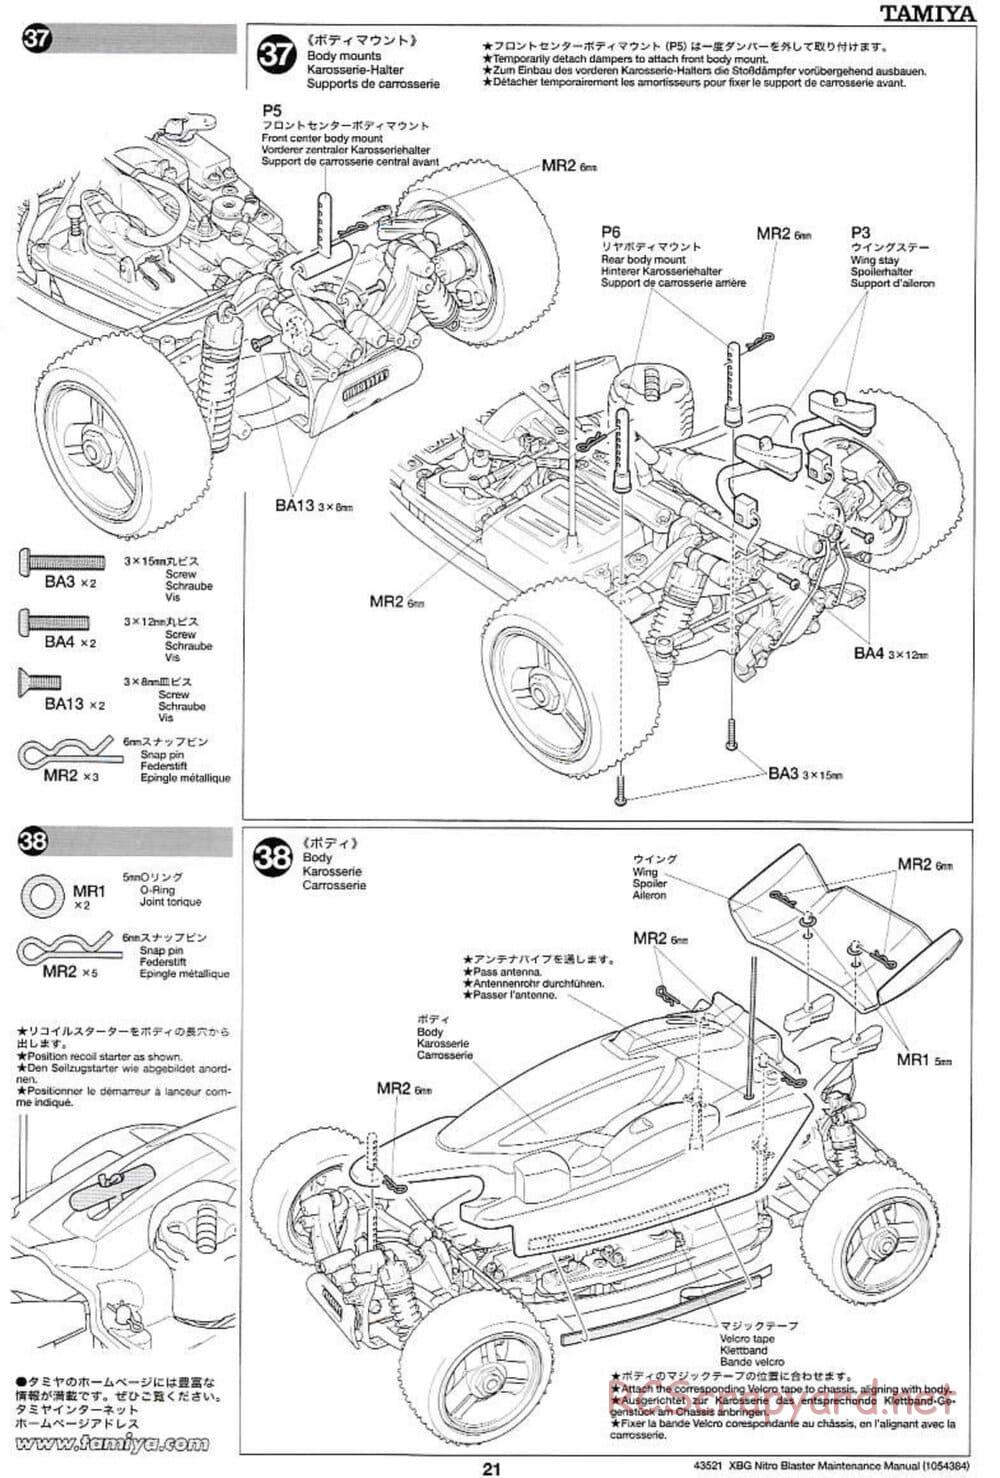 Tamiya - Nitro Blaster - NDF-01 - Maintenance Manual - Page 21